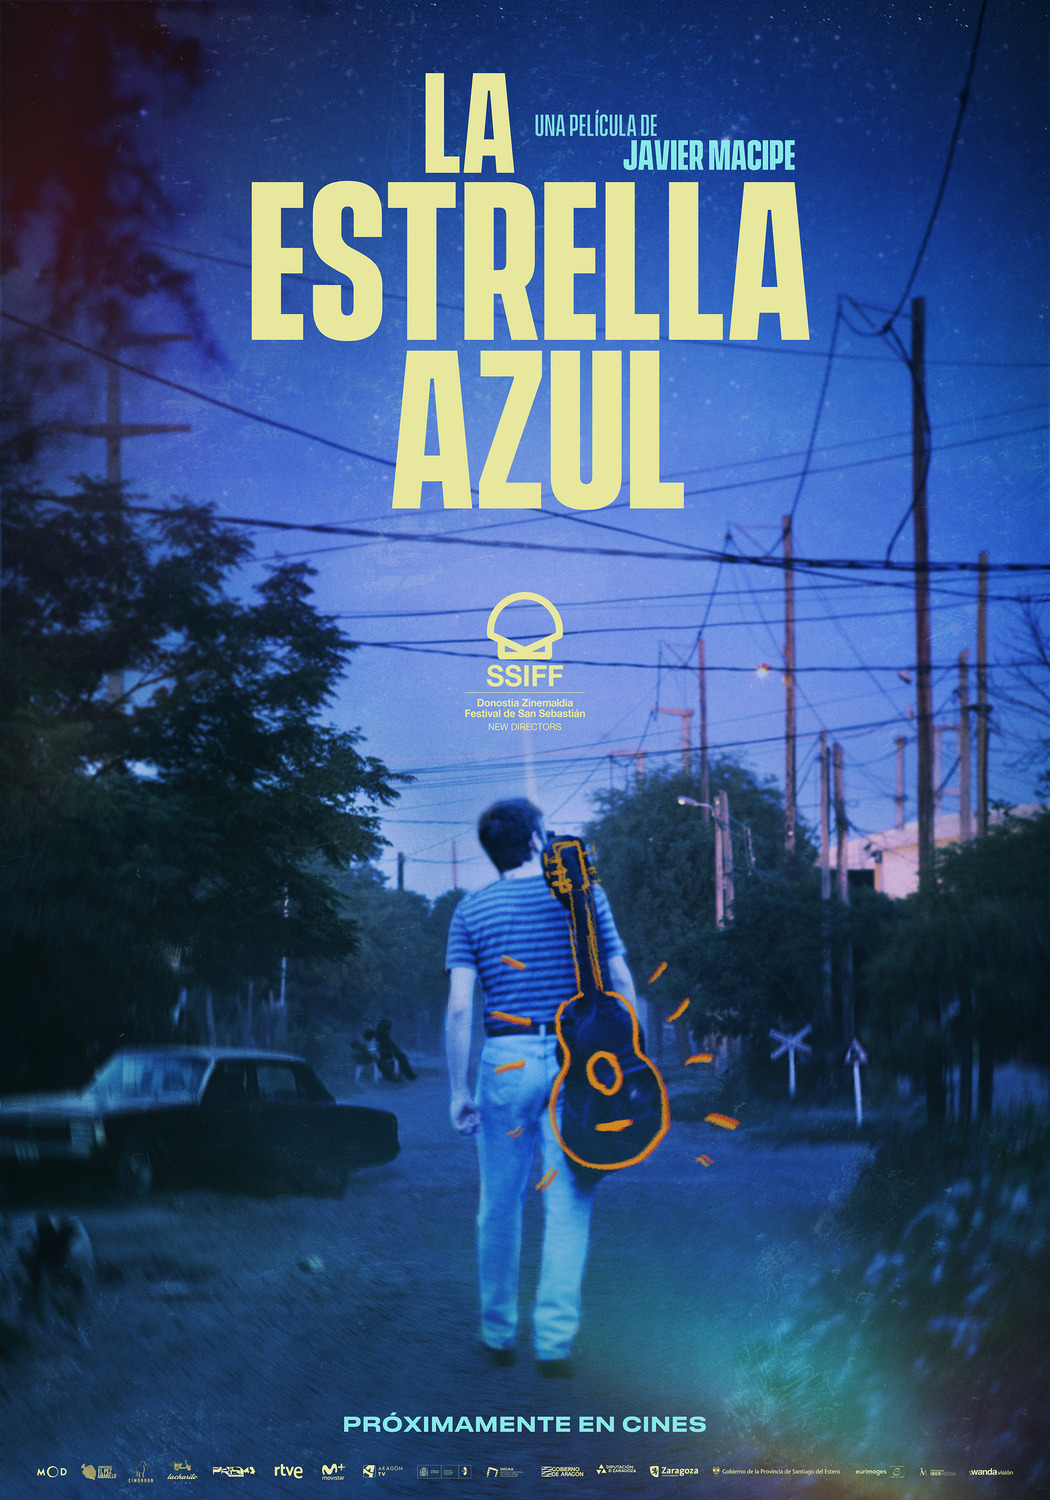 Extra Large Movie Poster Image for La estrella azul 